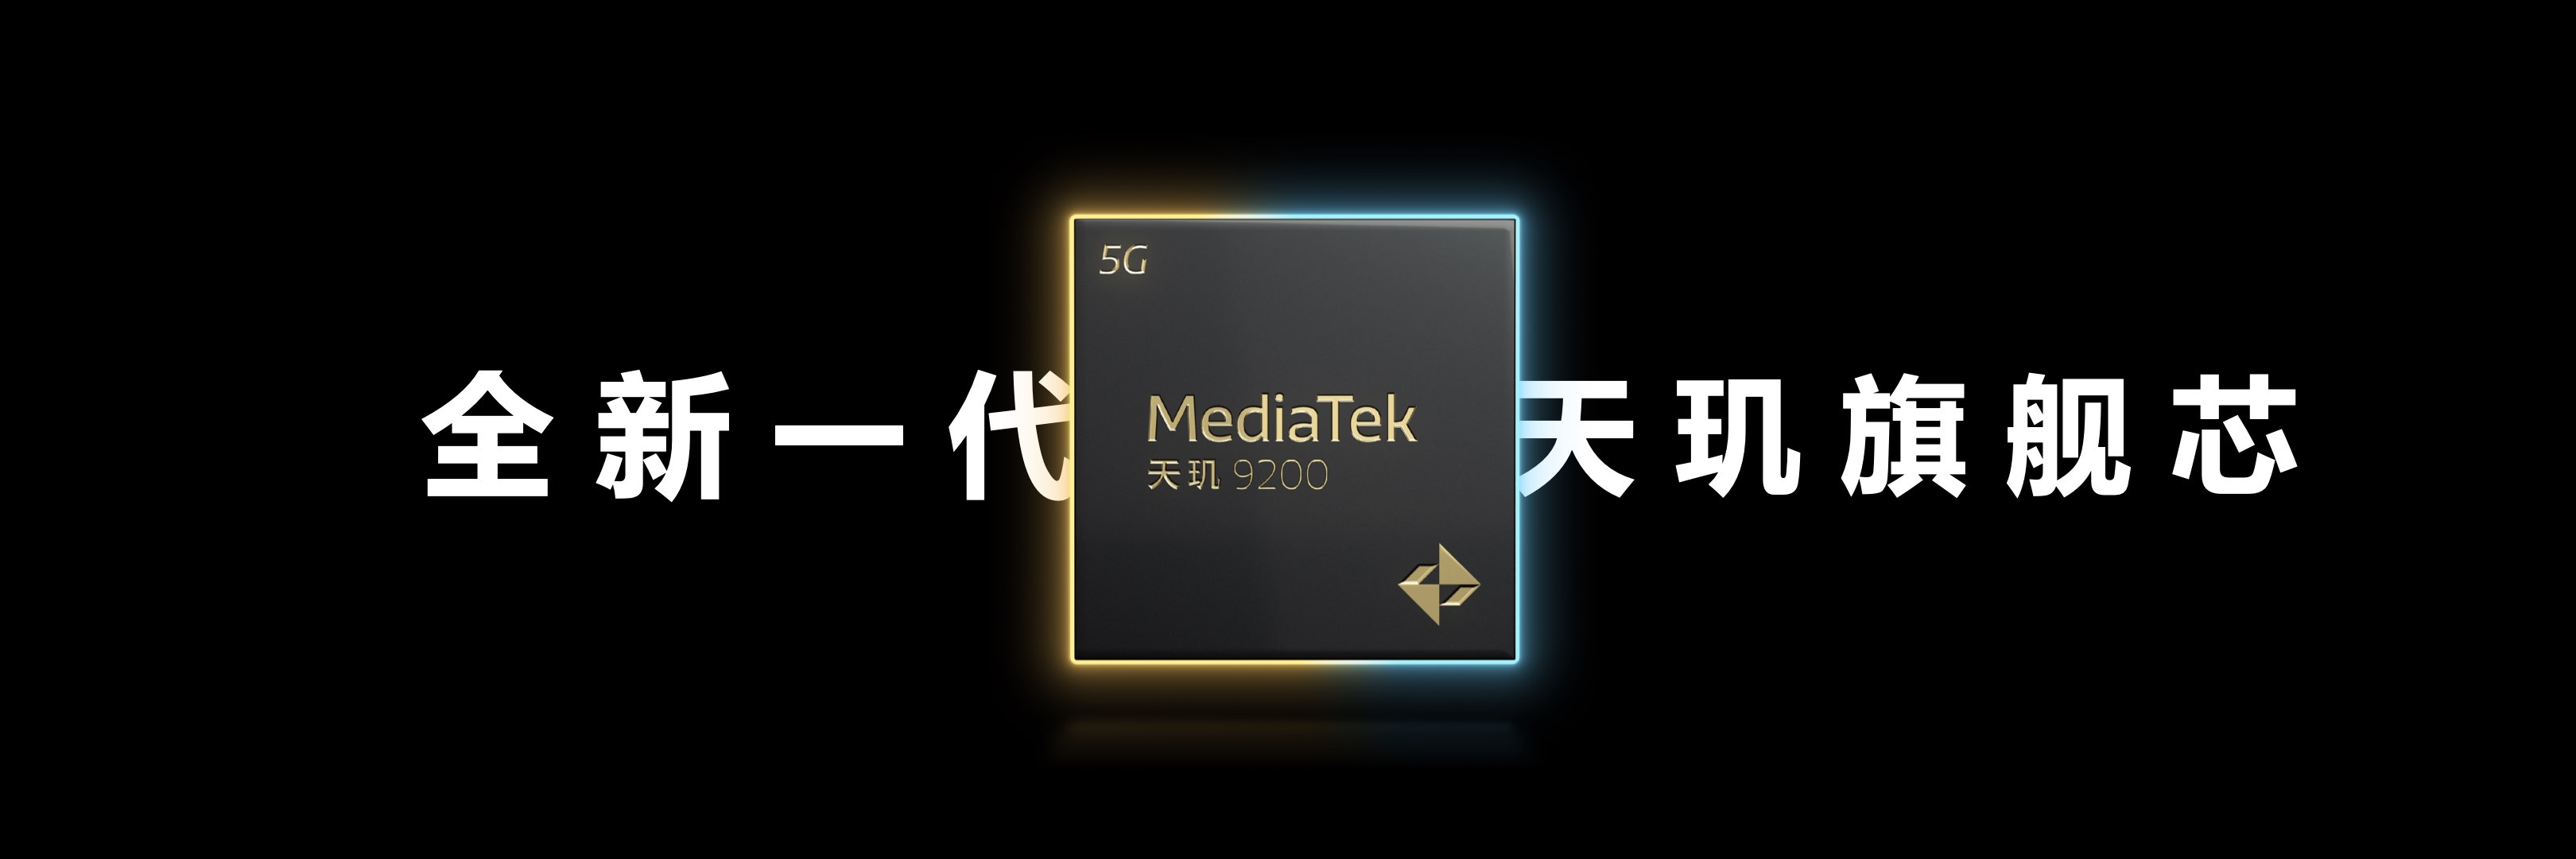 MediaTek发布天玑9200移动芯片  冷劲全速，开启旗舰新篇章-我爱音频网